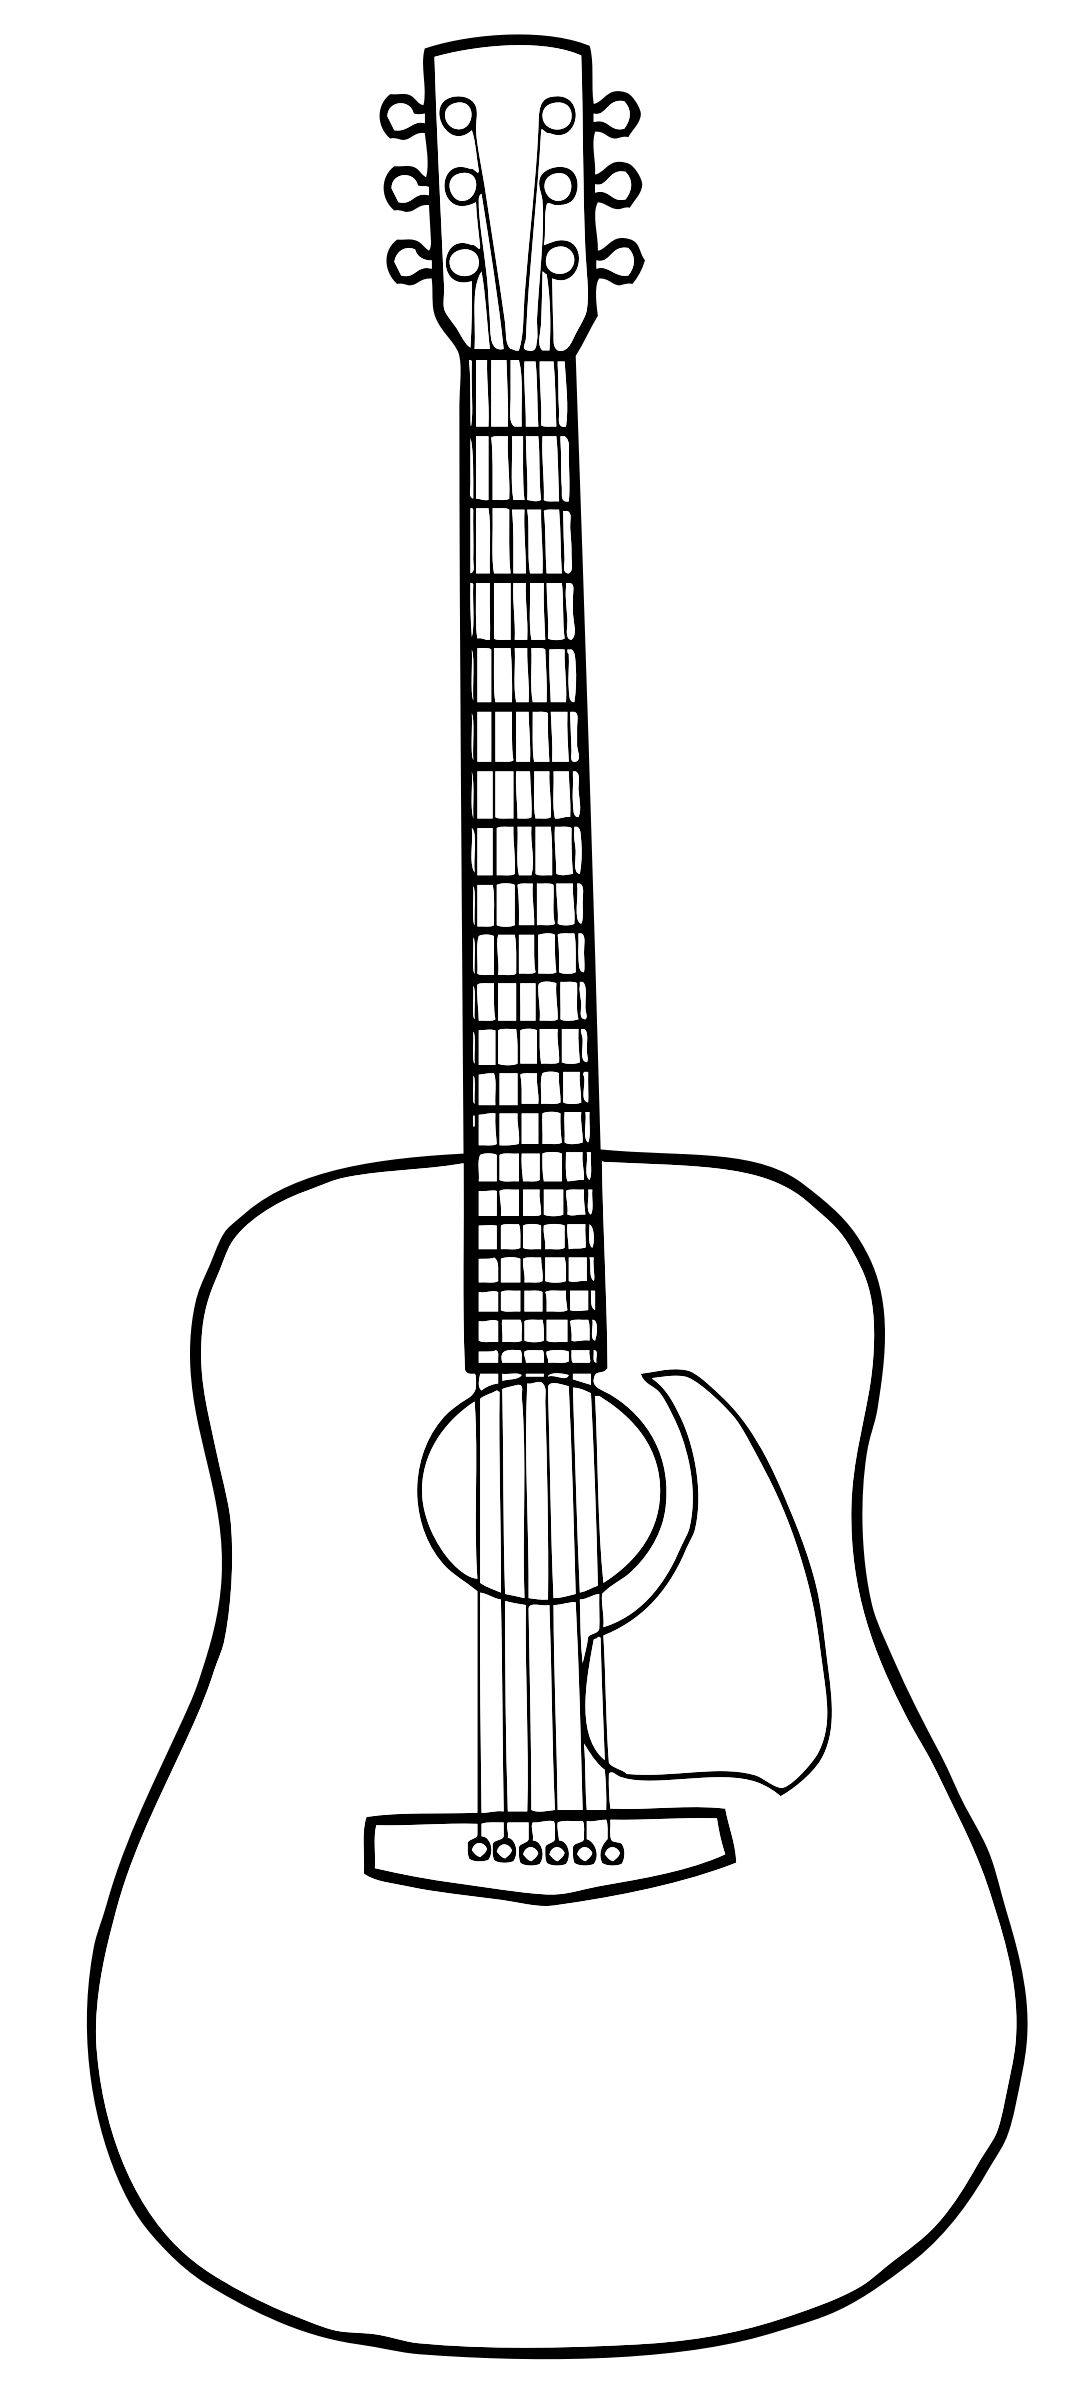 printable-guitar-templates